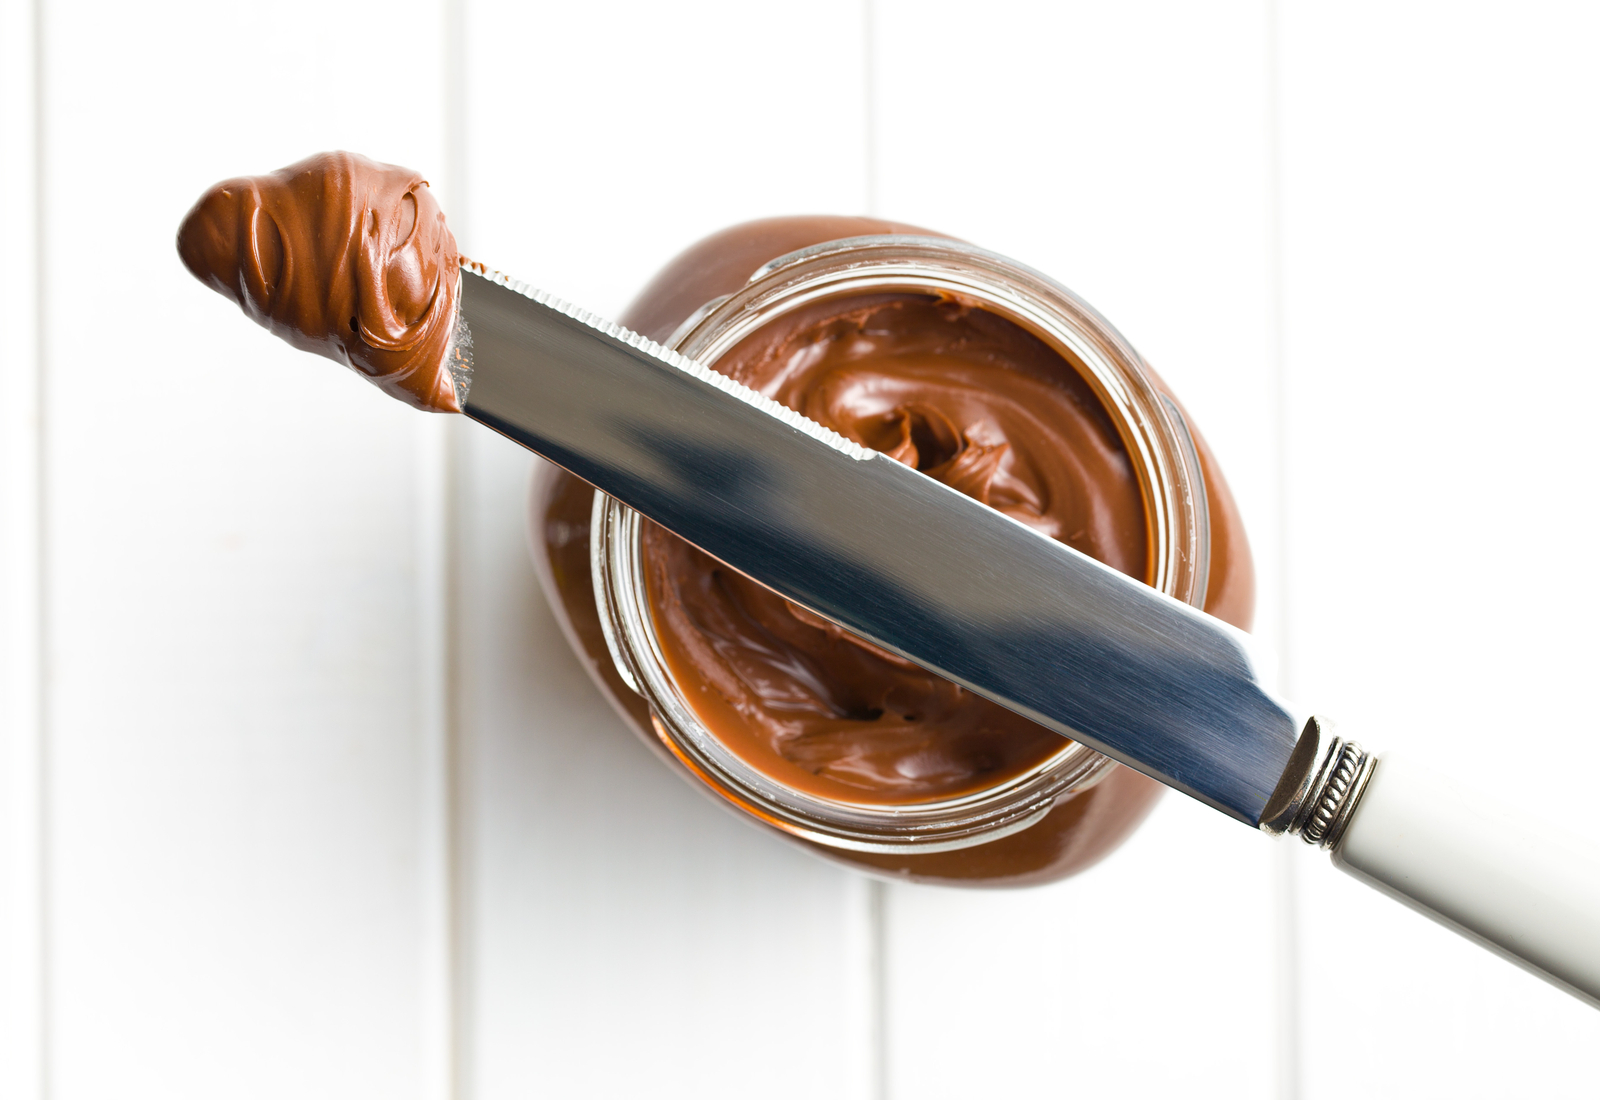 DouxMatok’s Incredo Sugar-based chocolate spreads hit the shelves in the United States. Photo by Jiri Hera via Shutterstock.com